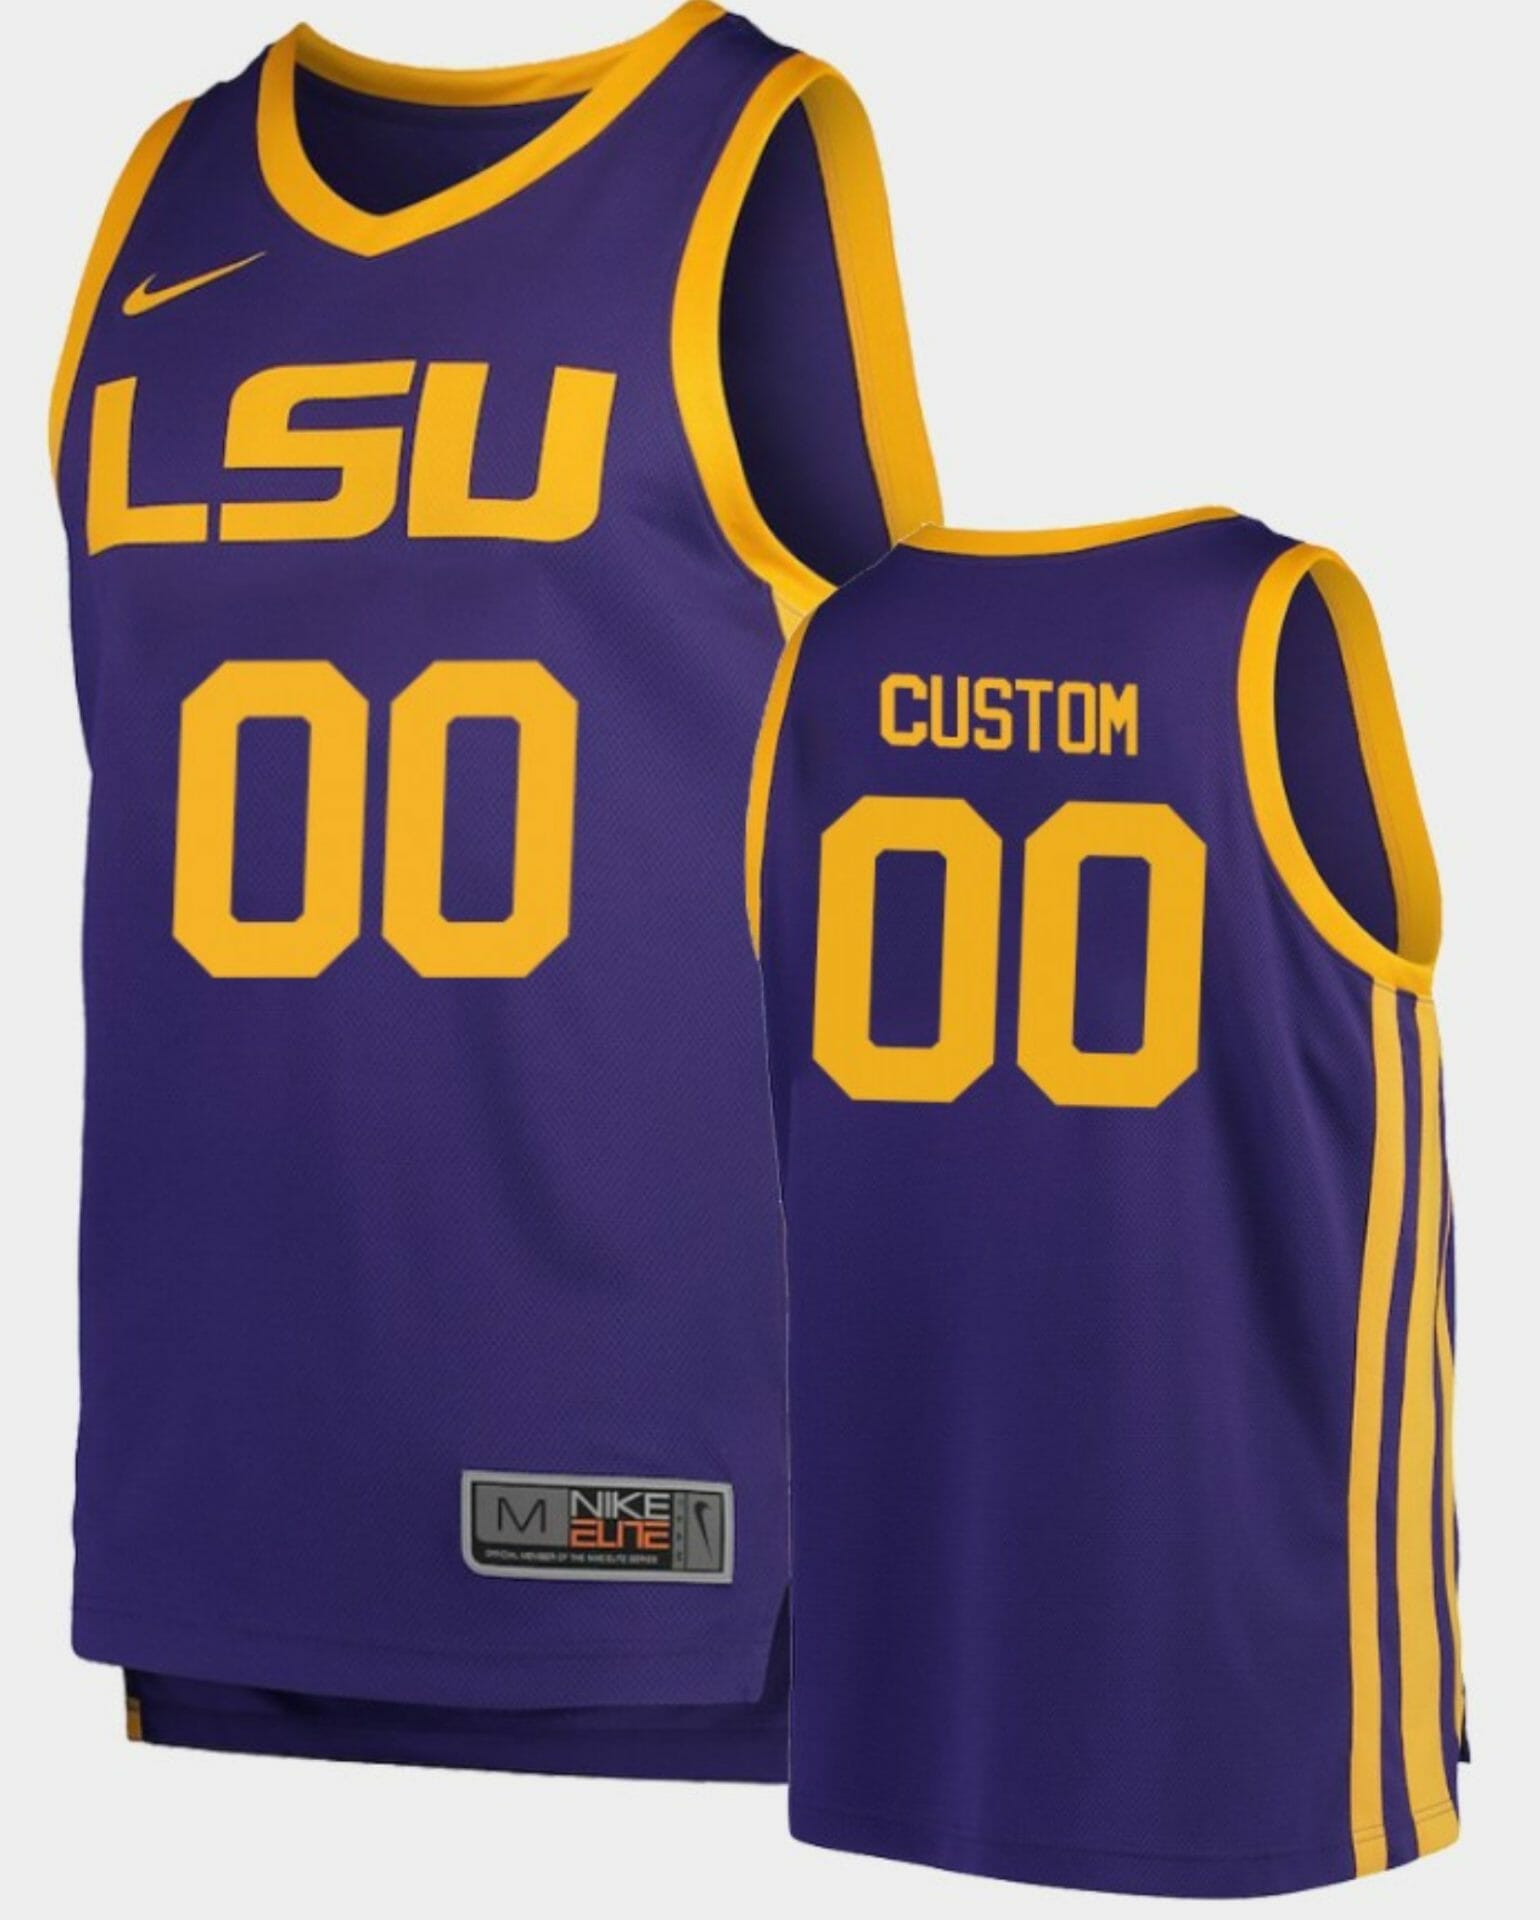 Trending] Buy New Custom LSU Tigers Jersey Replica Purple